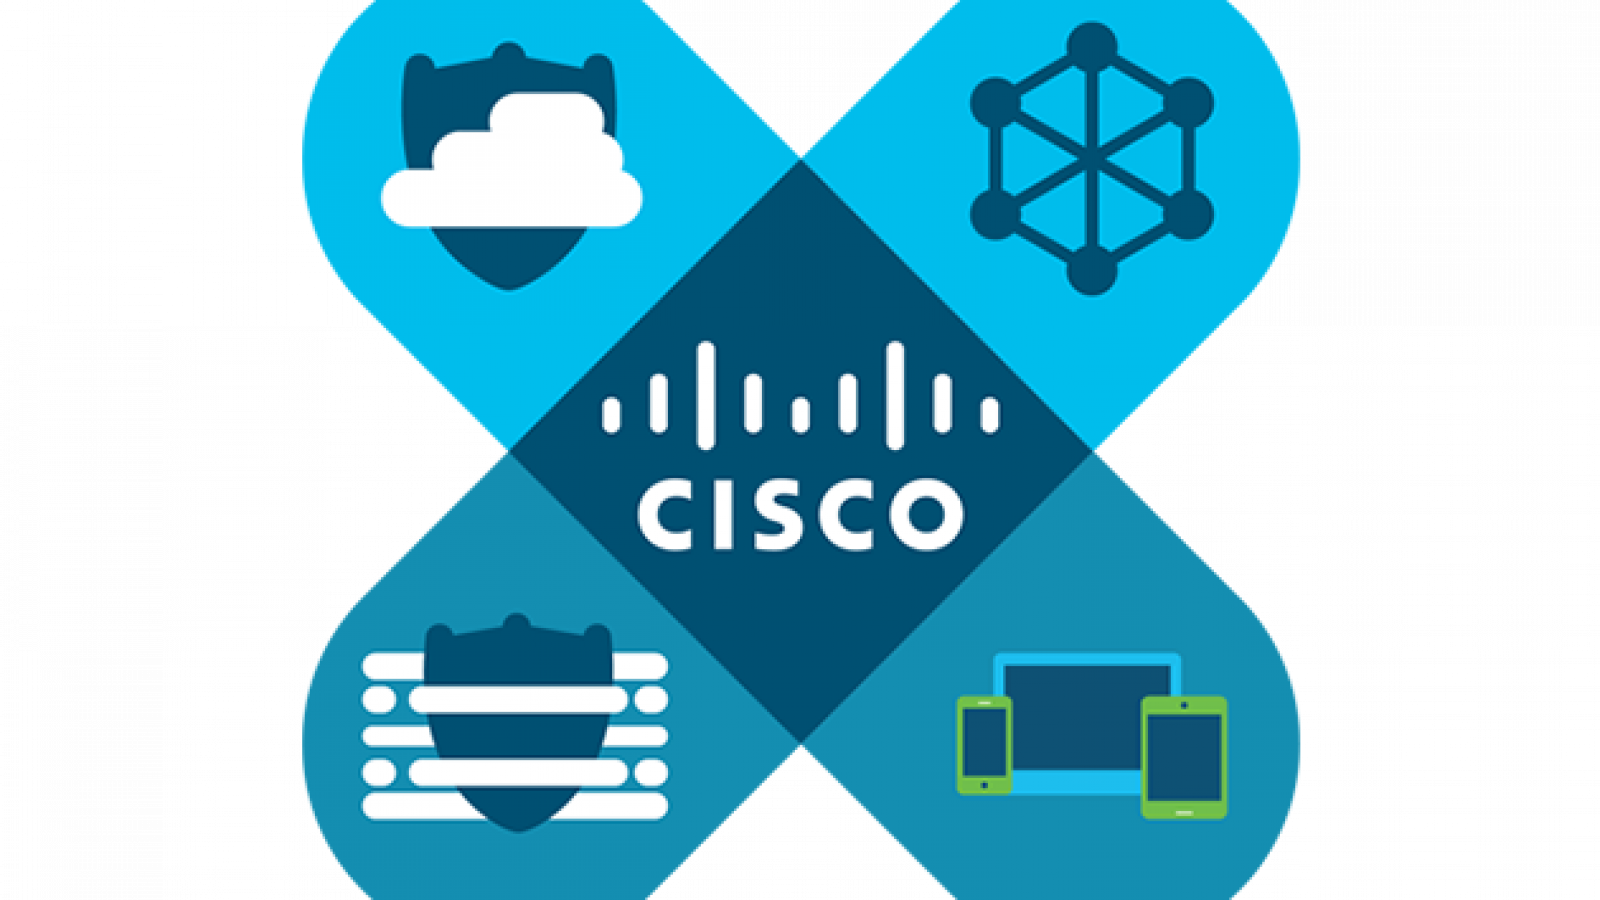 Cisco Networking